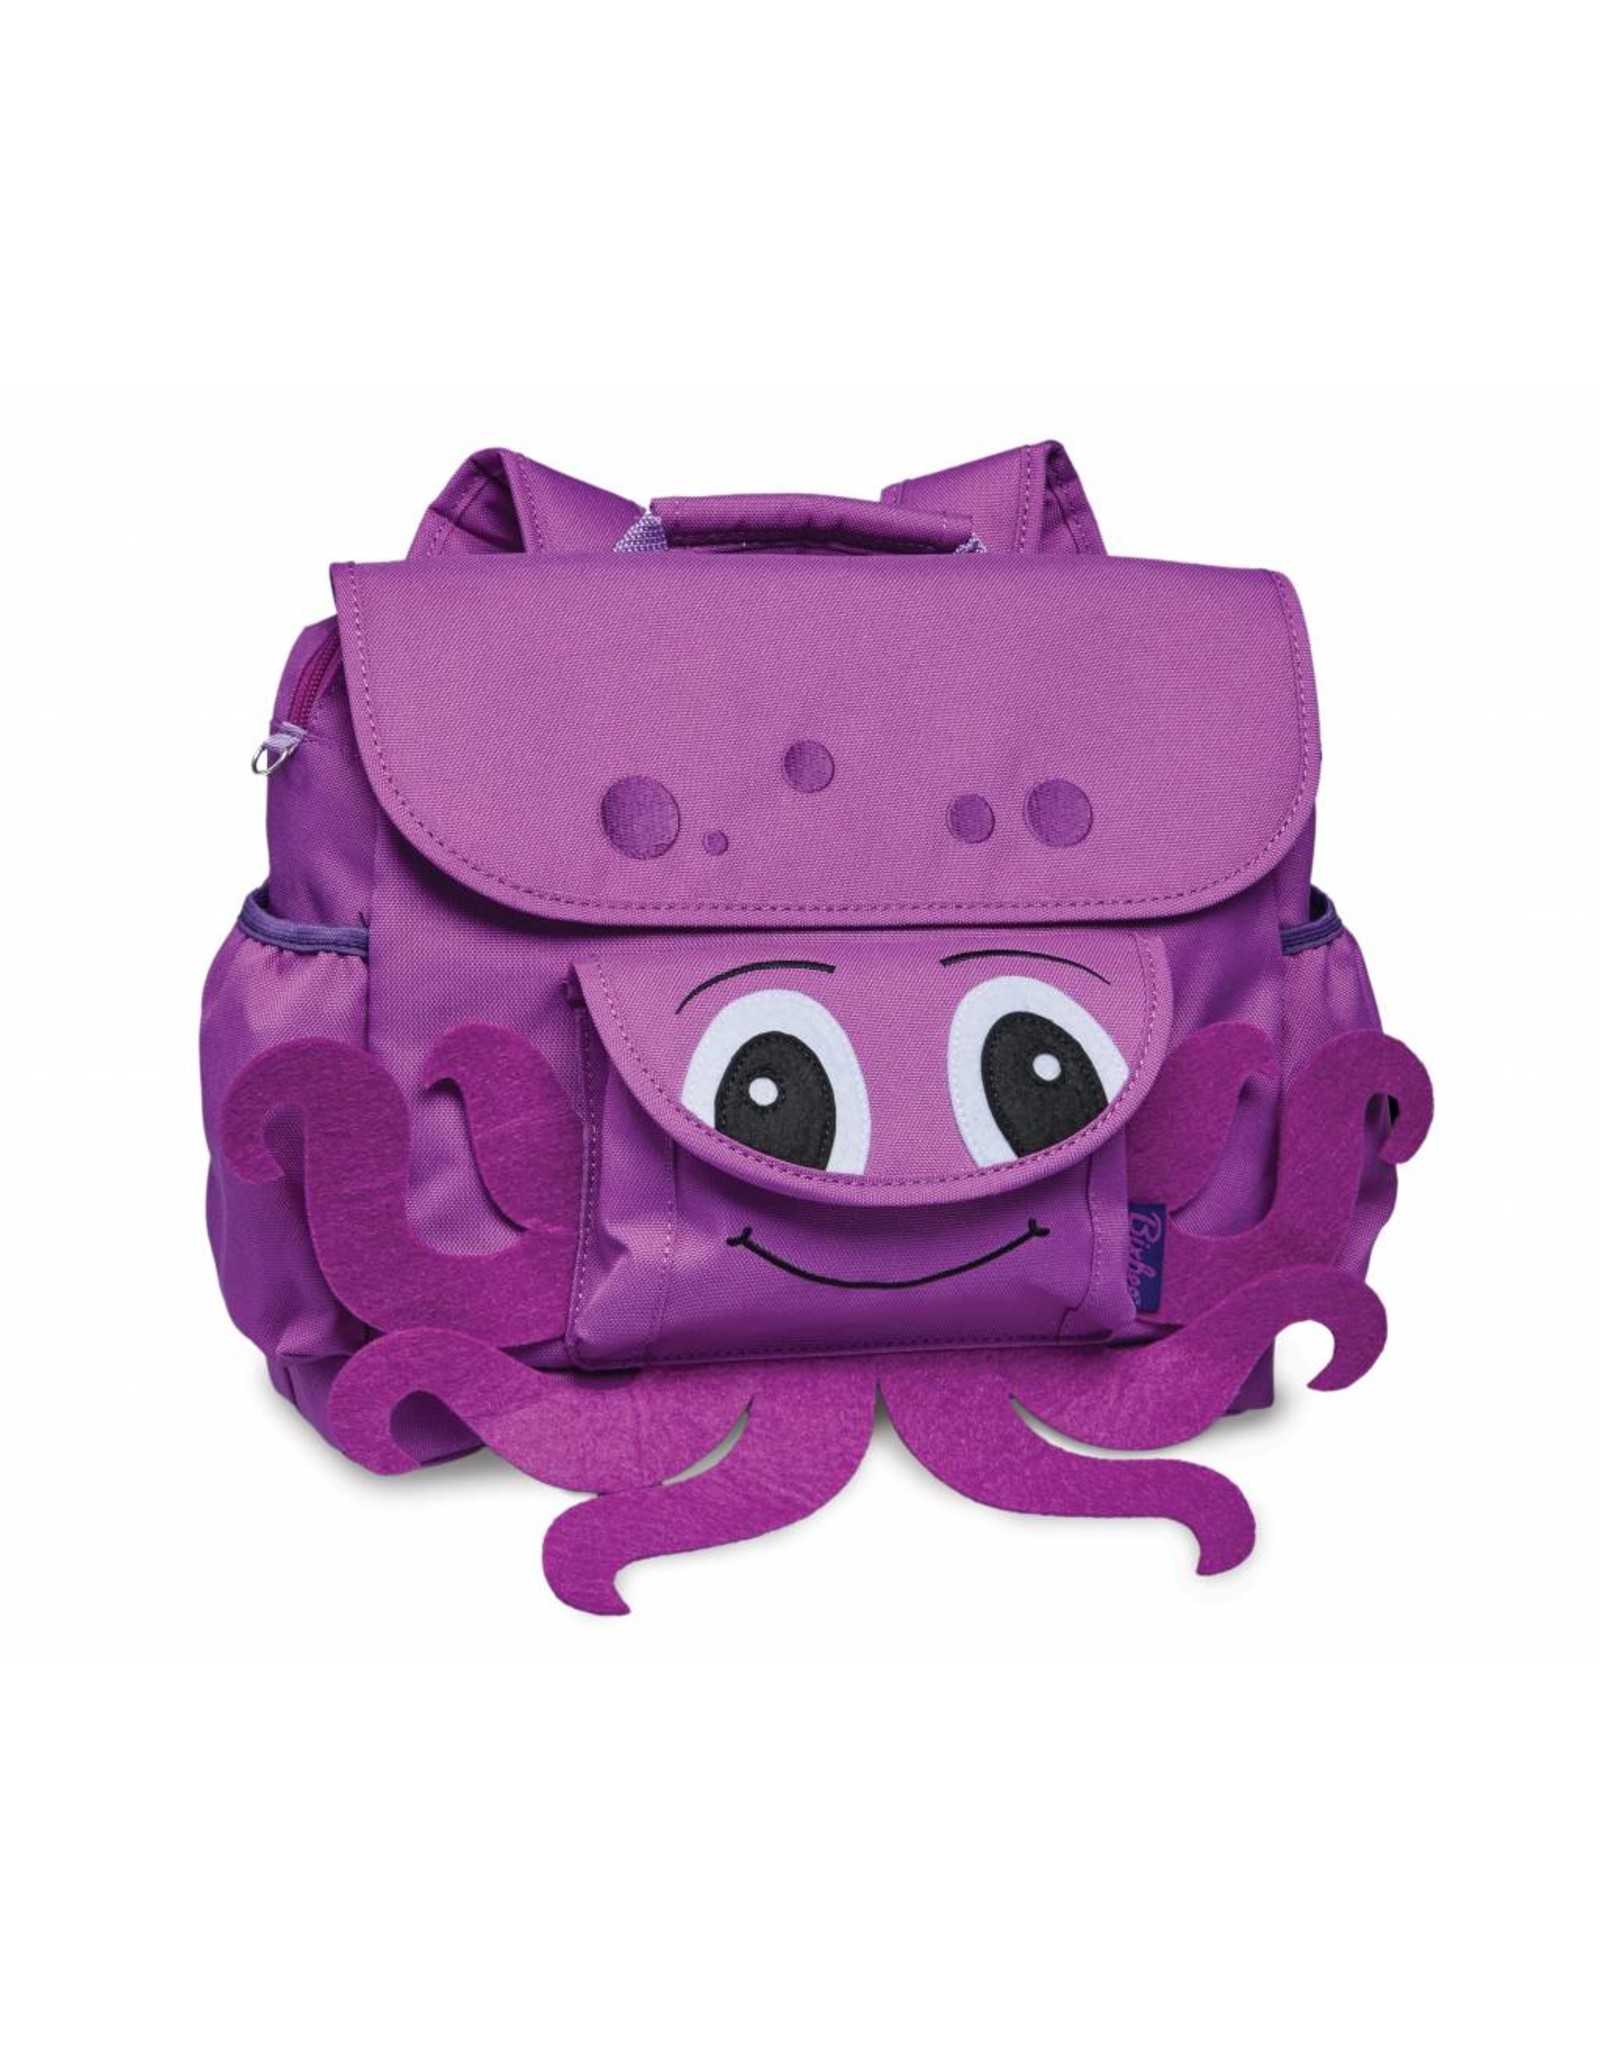 FANTAZIO Mummy Bag Backpack Cute Octopus Cartoon School Bag 